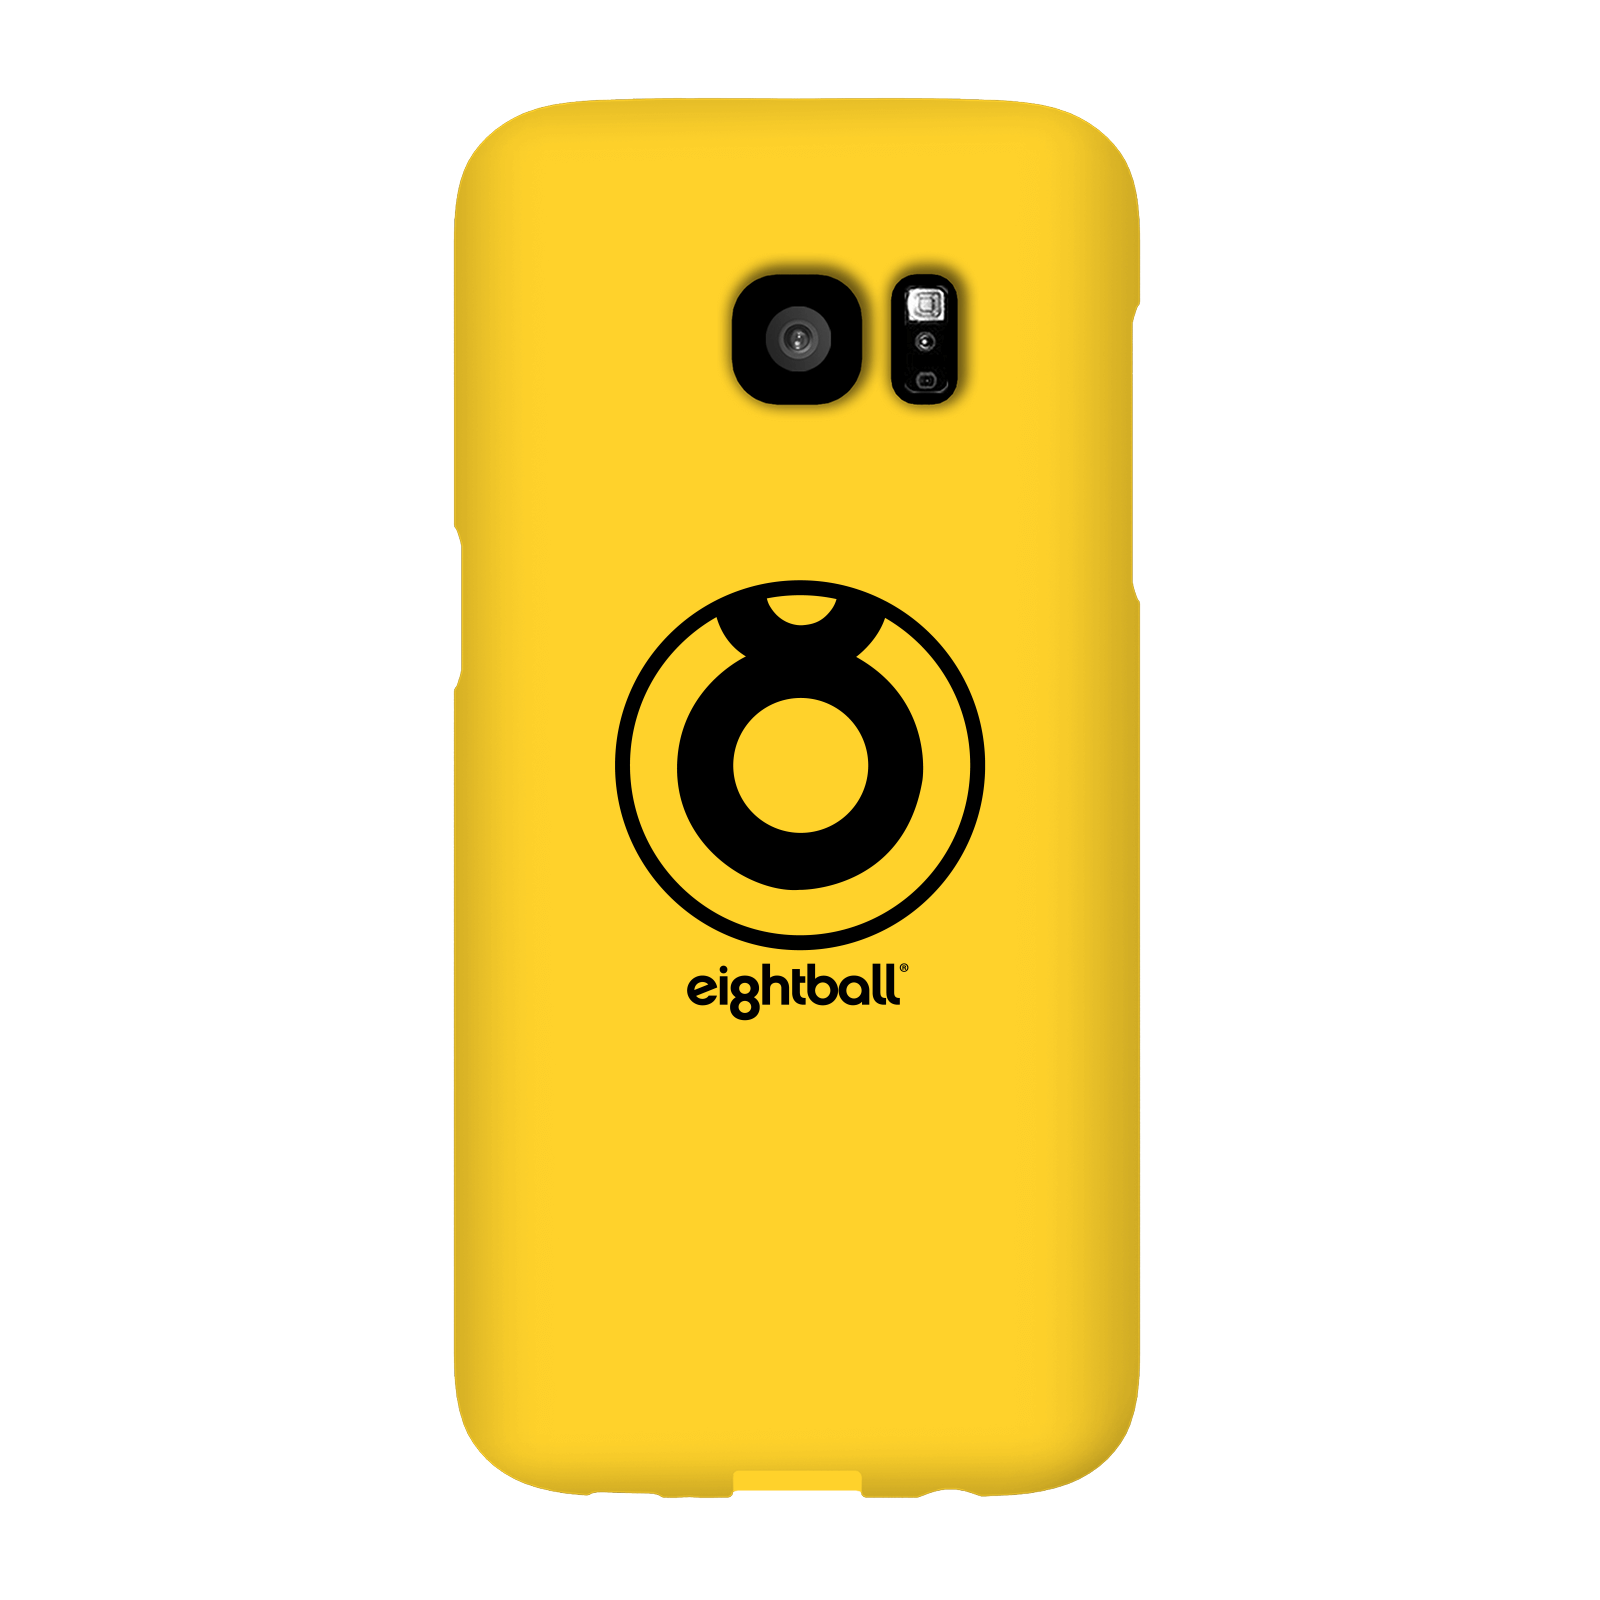 Funda Móvil Ei8htball Large Circle Logo para iPhone y Android - Samsung S7 Edge - Carcasa rígida - Mate